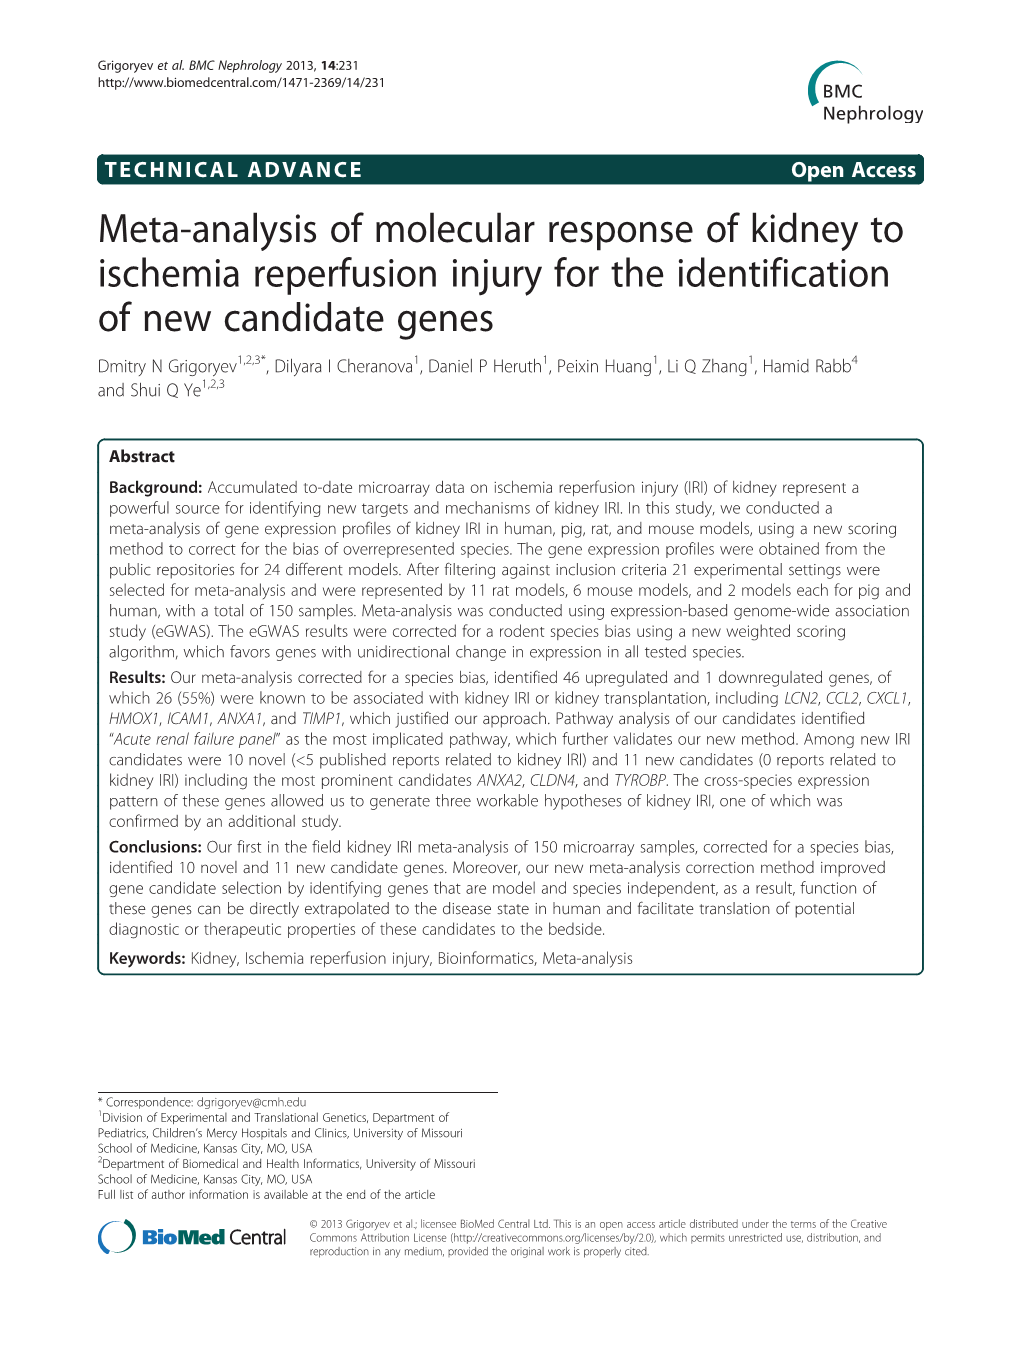 Meta-Analysis of Molecular Response of Kidney to Ischemia Reperfusion